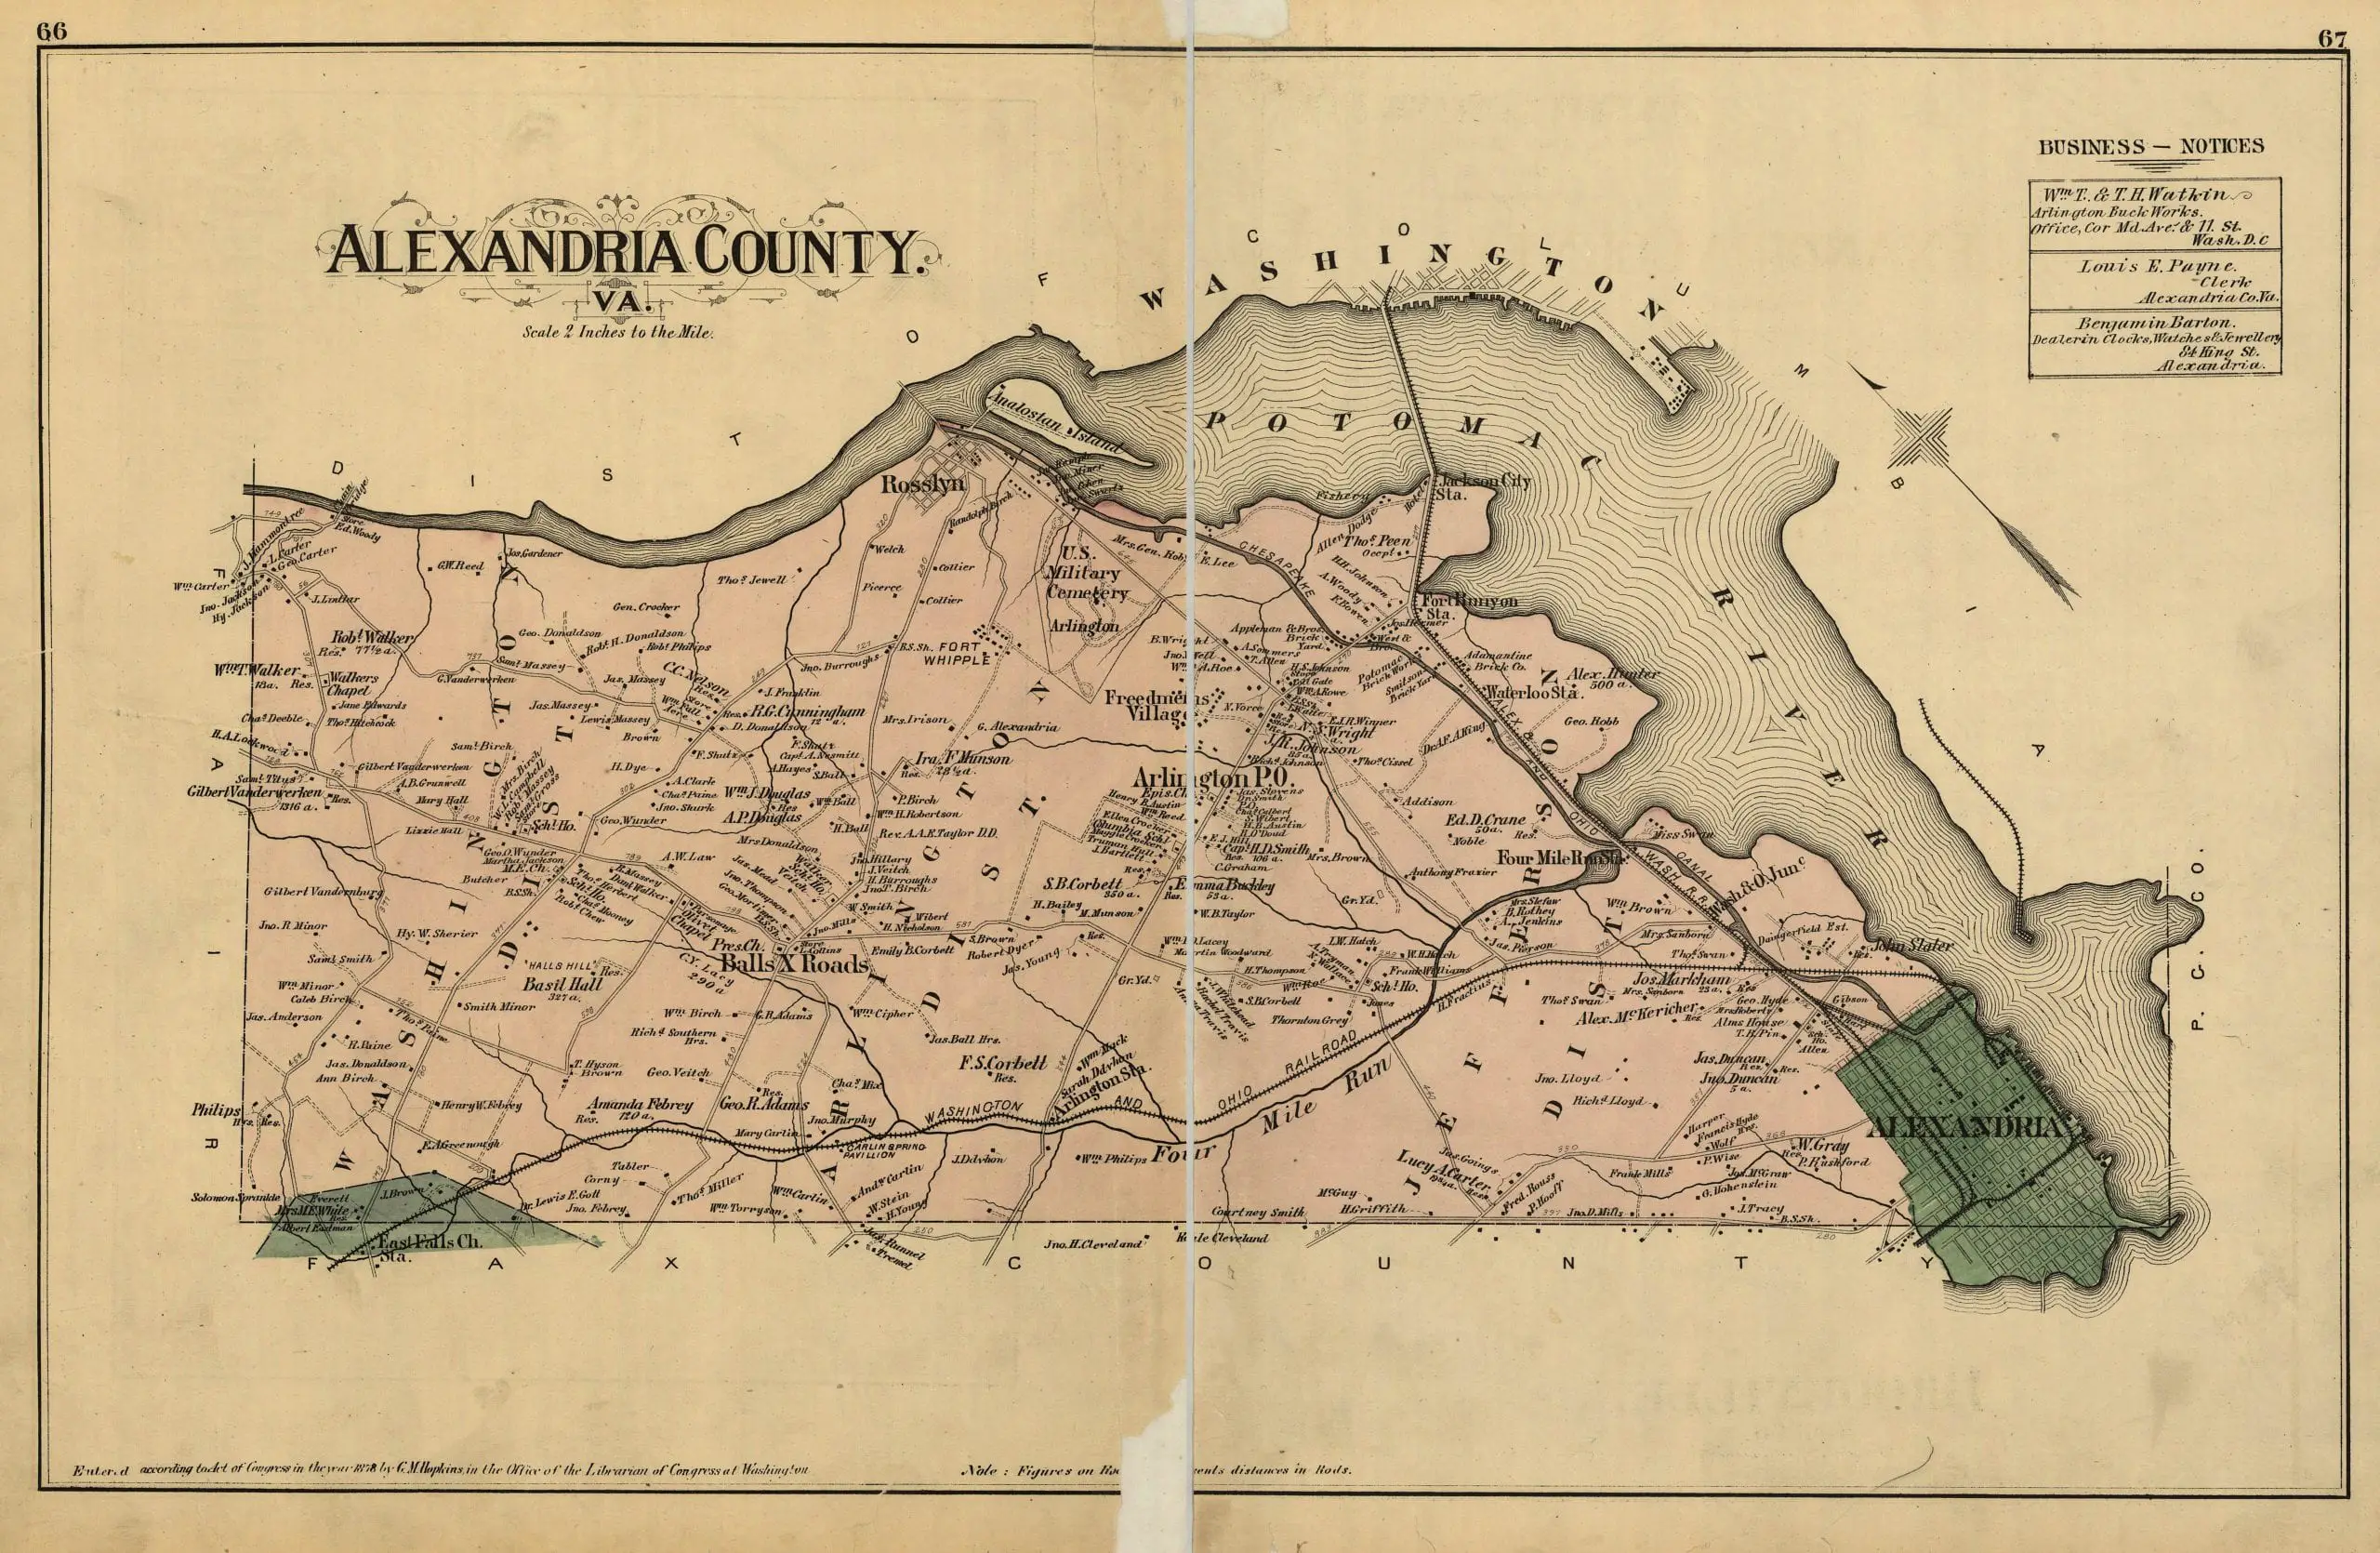 Alexandria County, Virginia in 1878 (Wikipedia)